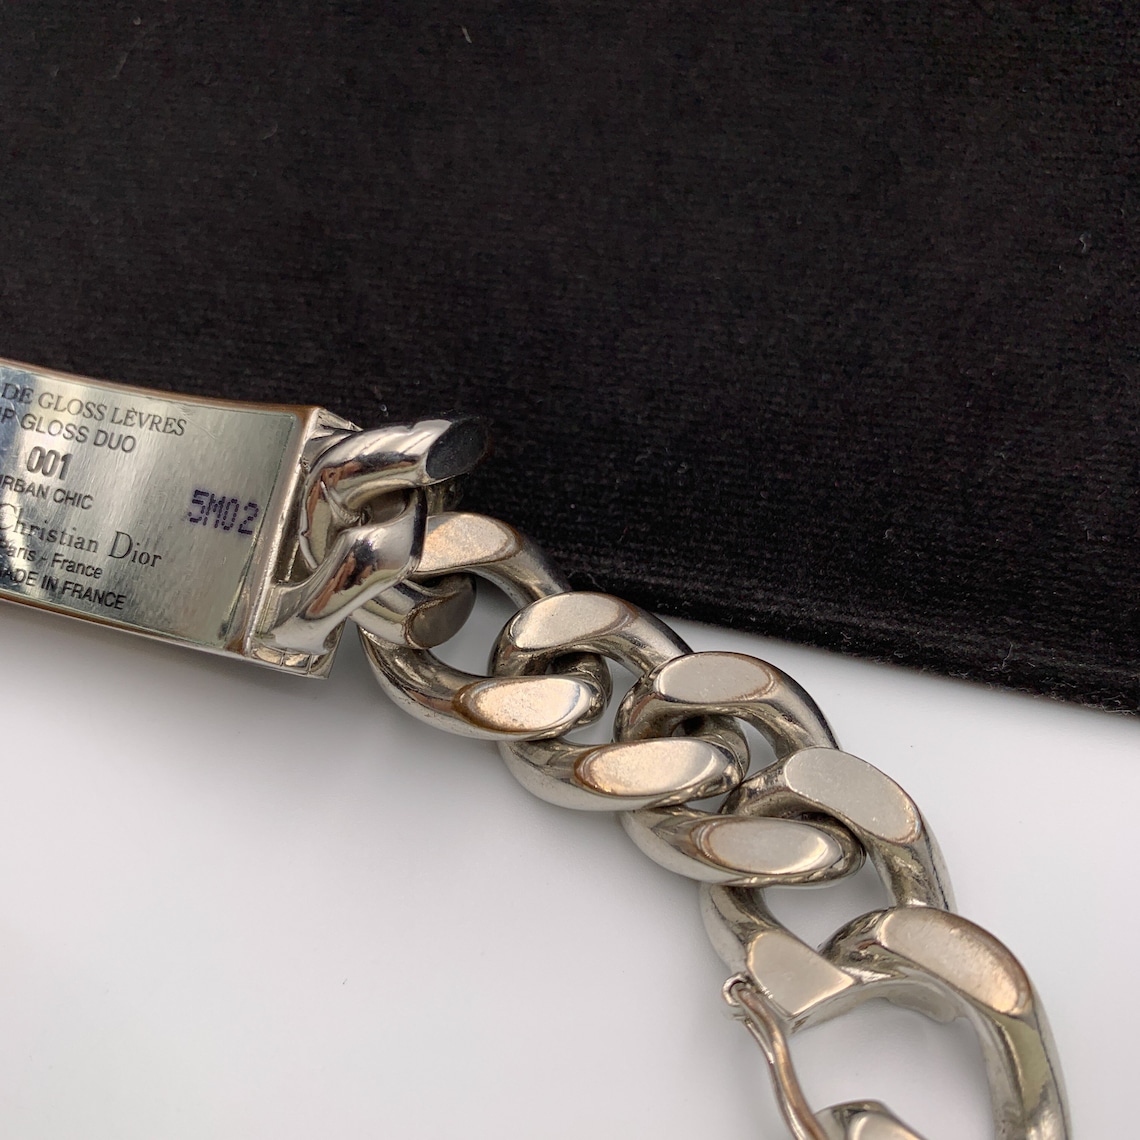 Christian Dior Lip Gloss Street Charm Bracelet | Etsy